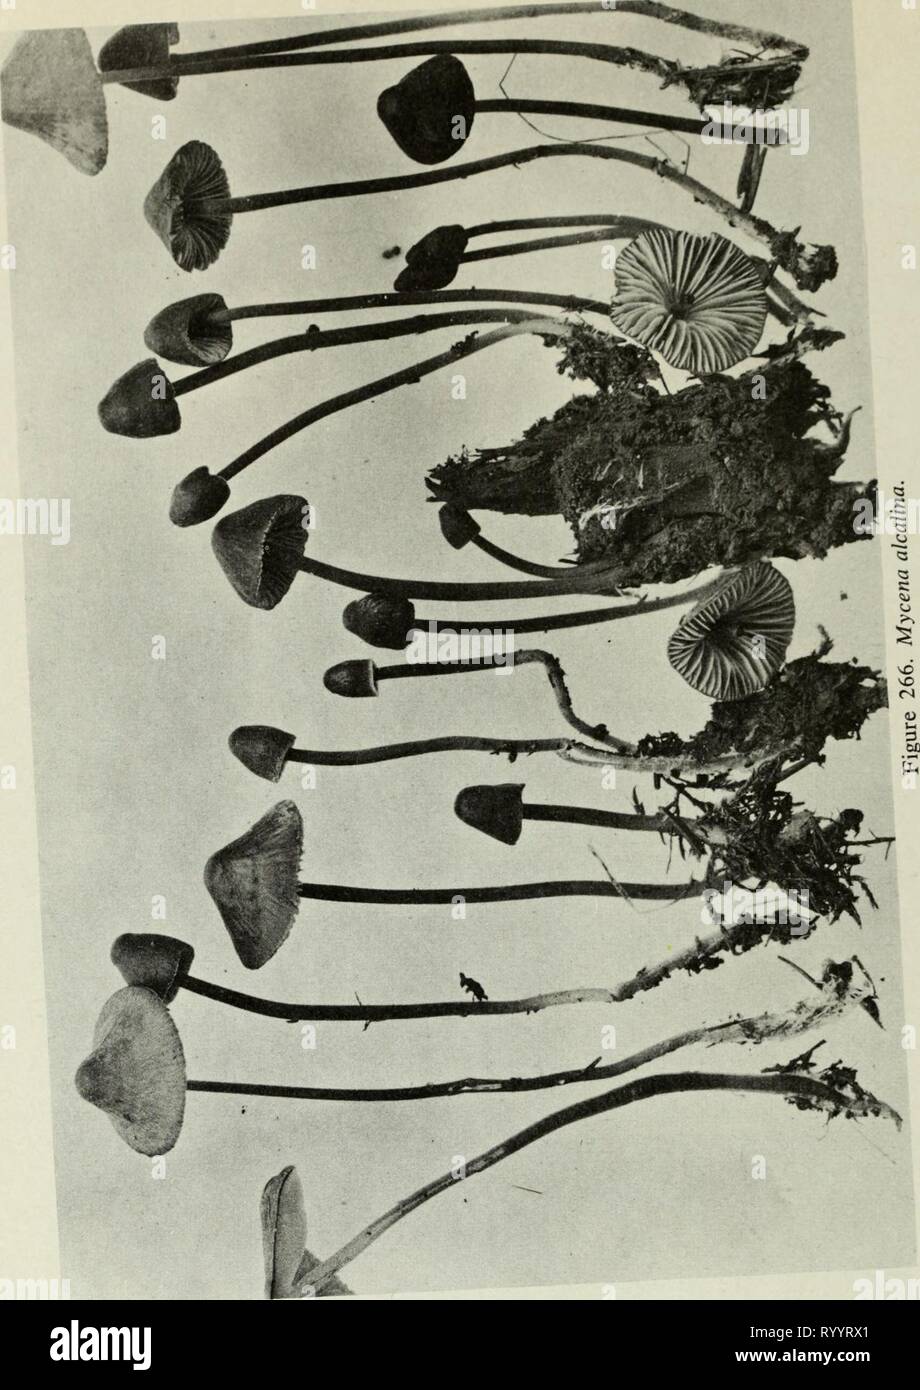 Edible and poisonous mushrooms of Edible and poisonous mushrooms of Canada . ediblepoisonousm00grov Year: 1979  I 267. Pholiota aurivella. 269. F. caperata. 271. P- marginata. 273. P- fiammans. 275. P- squarrosoides. 268. P. aurivella. 270. F. caperata. 272. F. marginata. 21 A. P. spectabilis. 276. Flammula spumosa. 174 Stock Photo